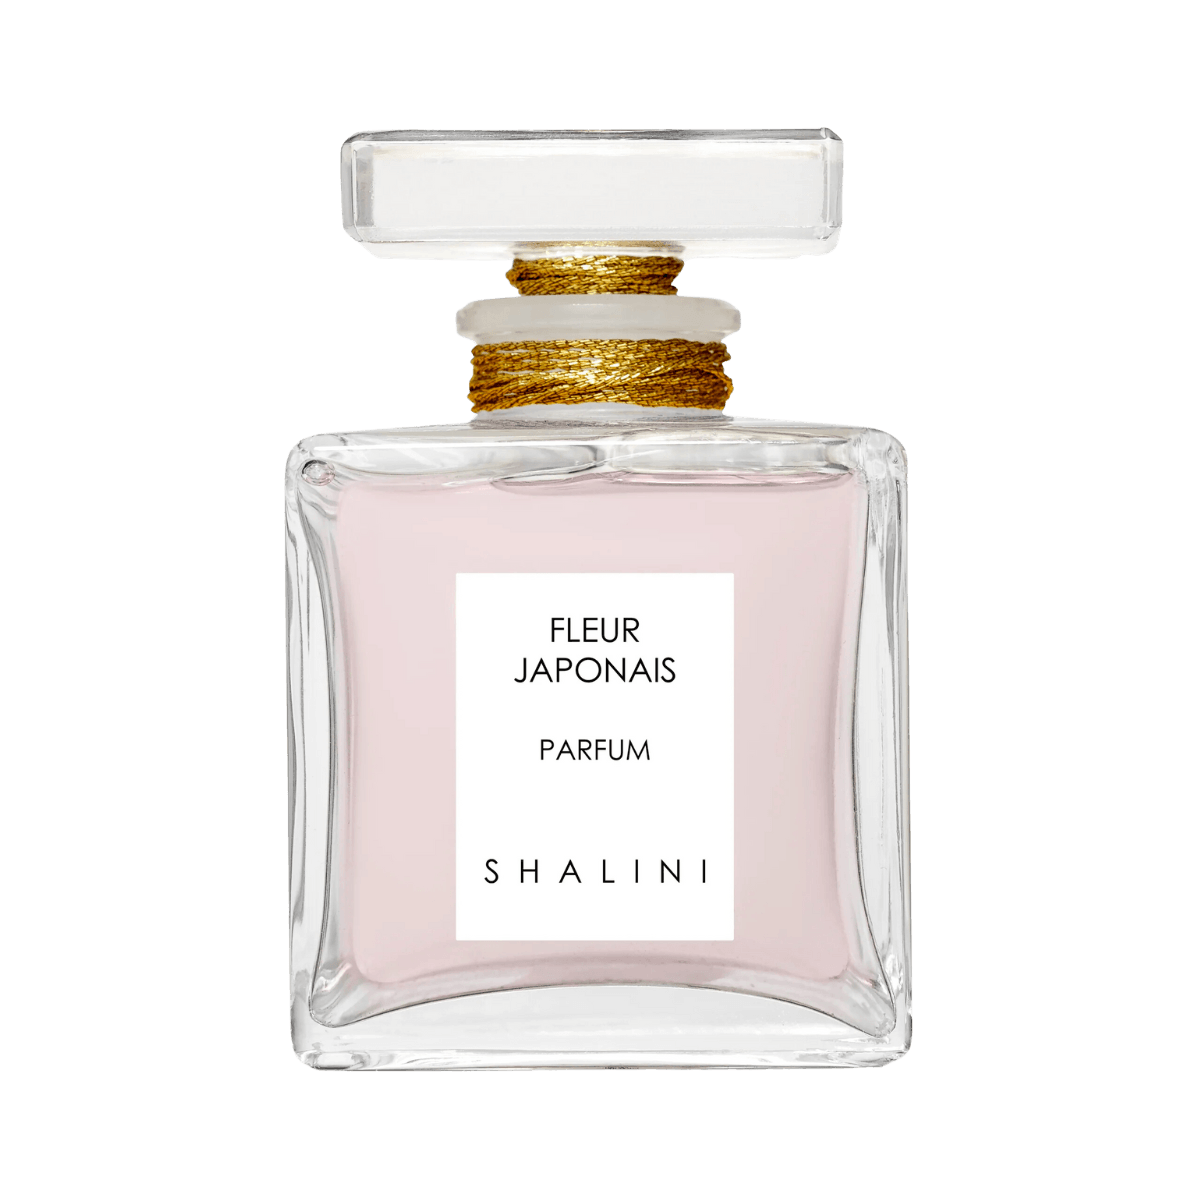 Image of Fleur Japonais glass stopper by the perfume brand Shalini